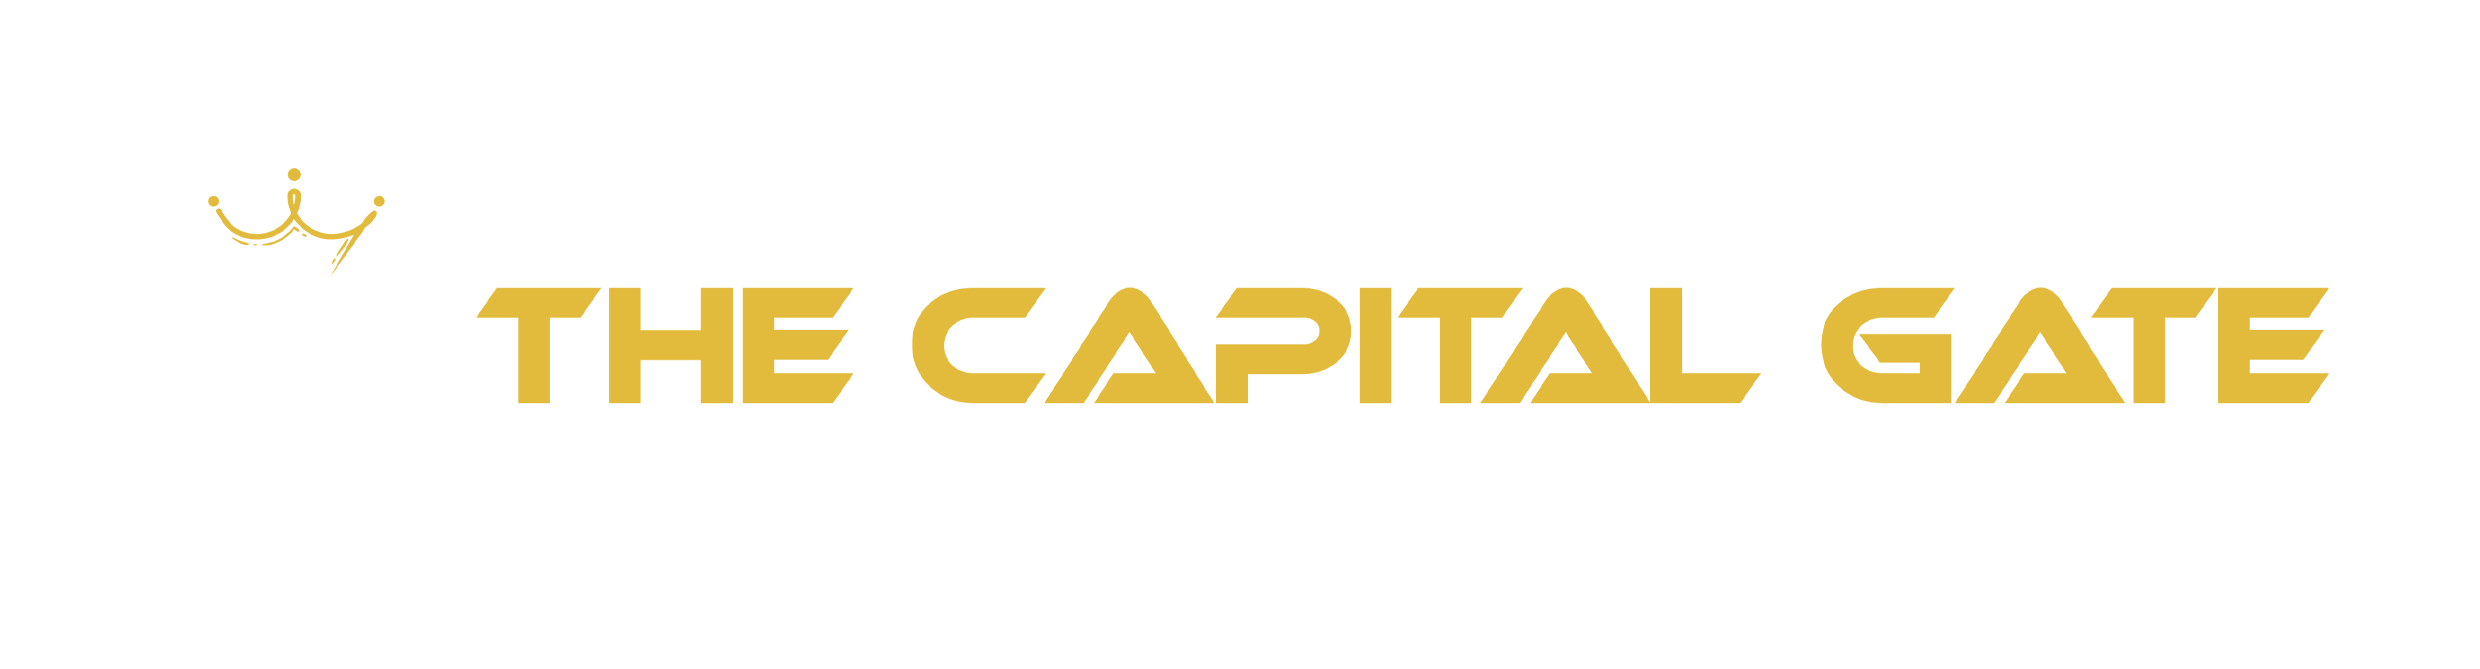 The Capital Gate